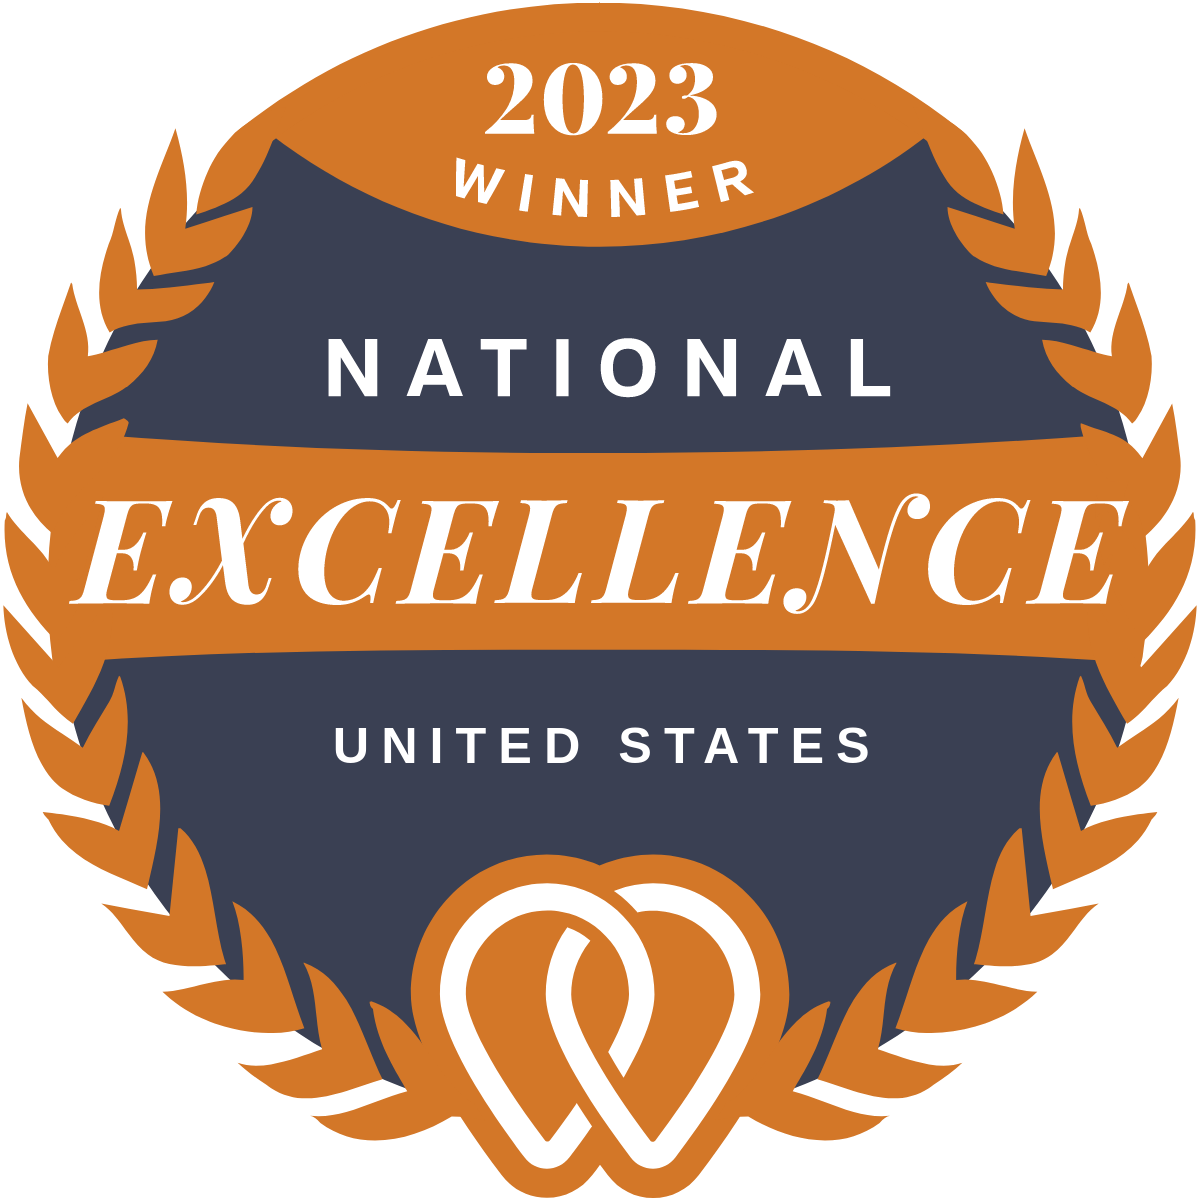 Seattle, Washington, United States 营销公司 Exo Agency 获得了 2023 National Excellence Winner In United States 奖项